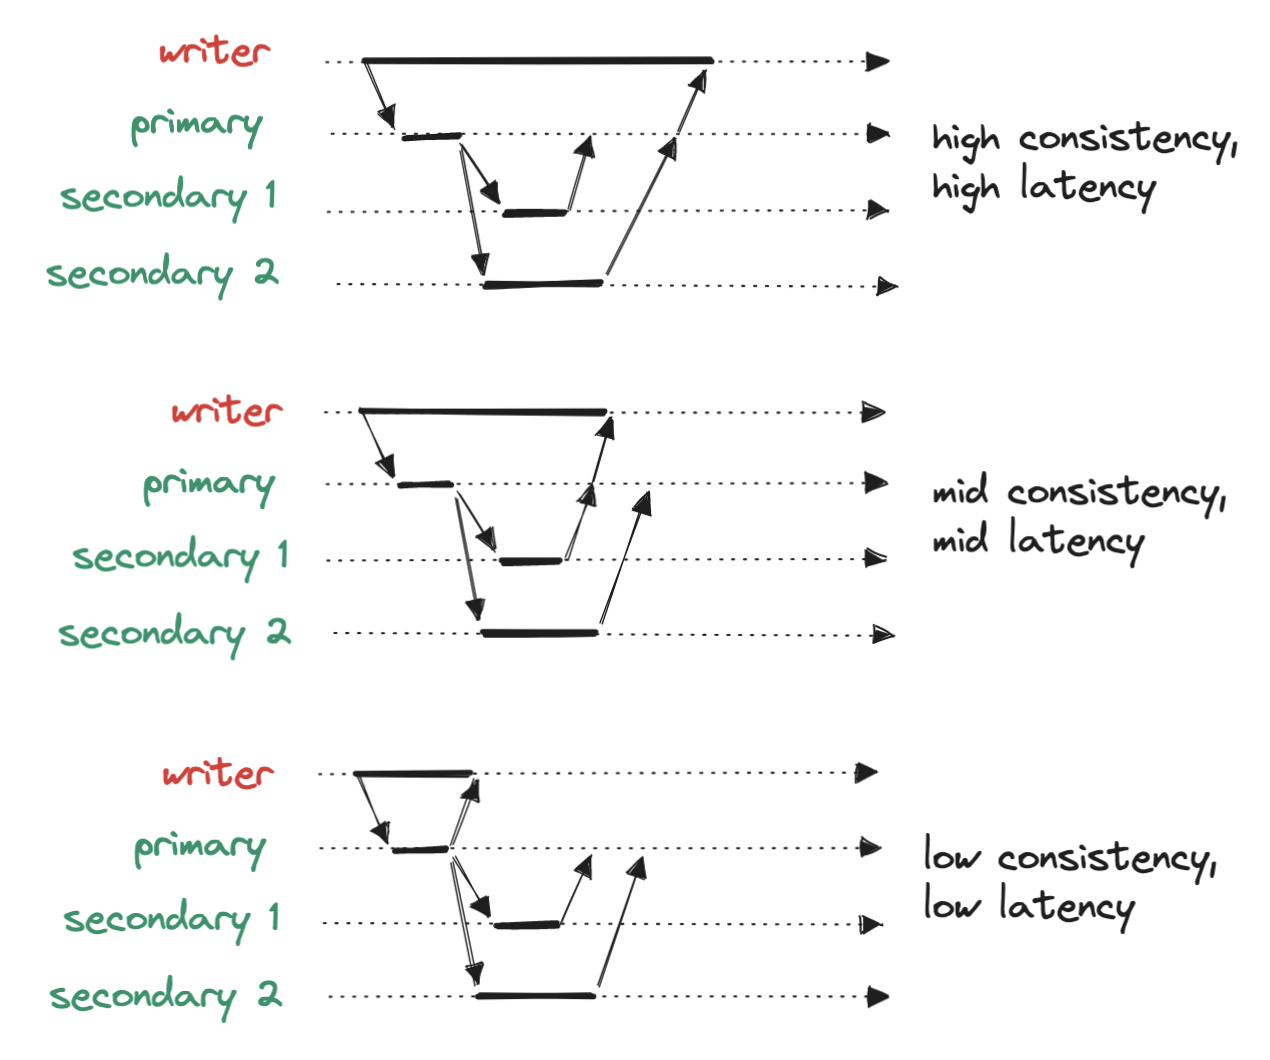 Consistency vs. latency